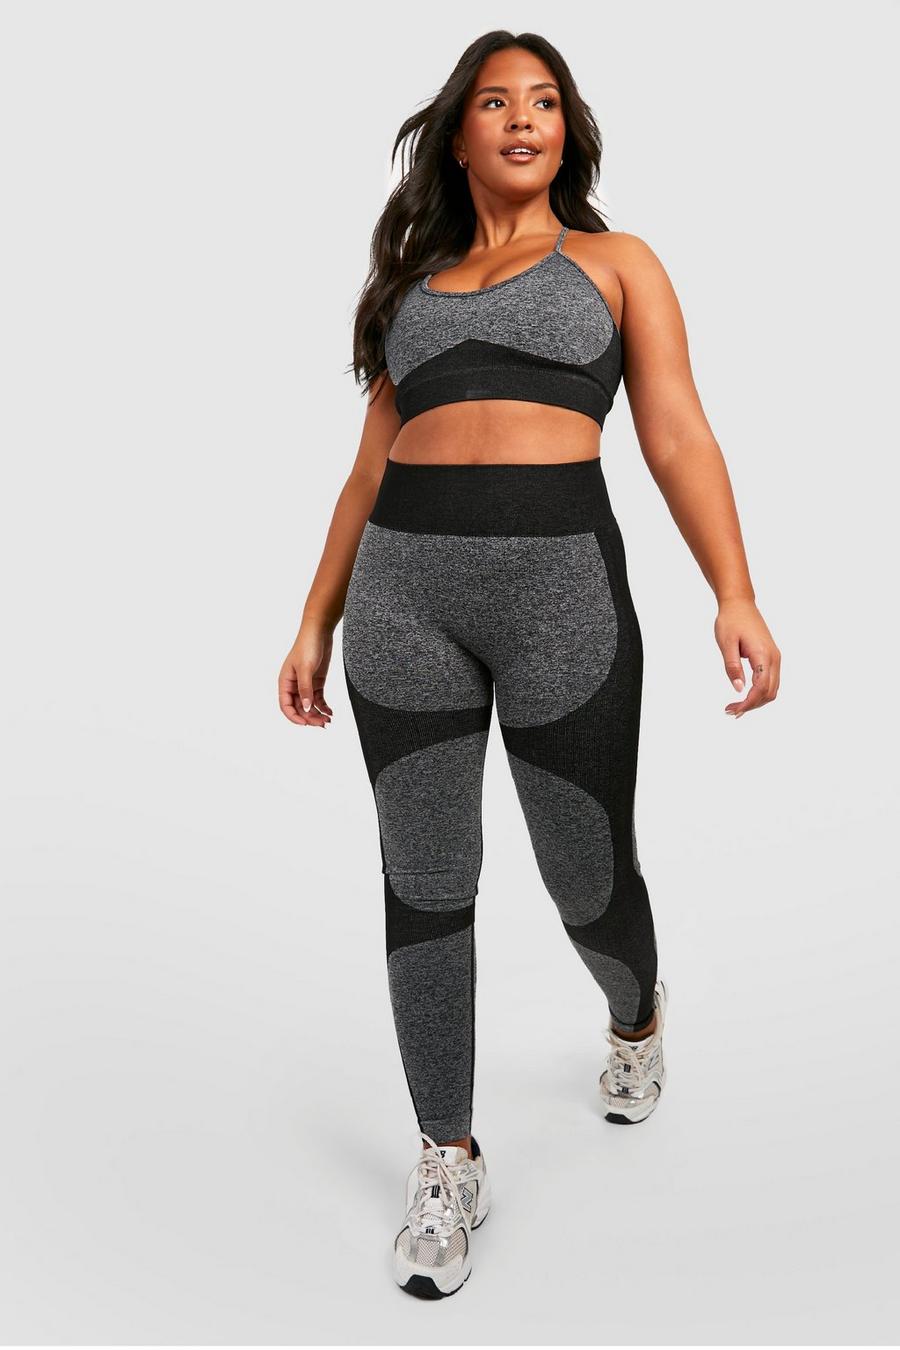 Buy Champion women plus size athletic fit training leggings navy